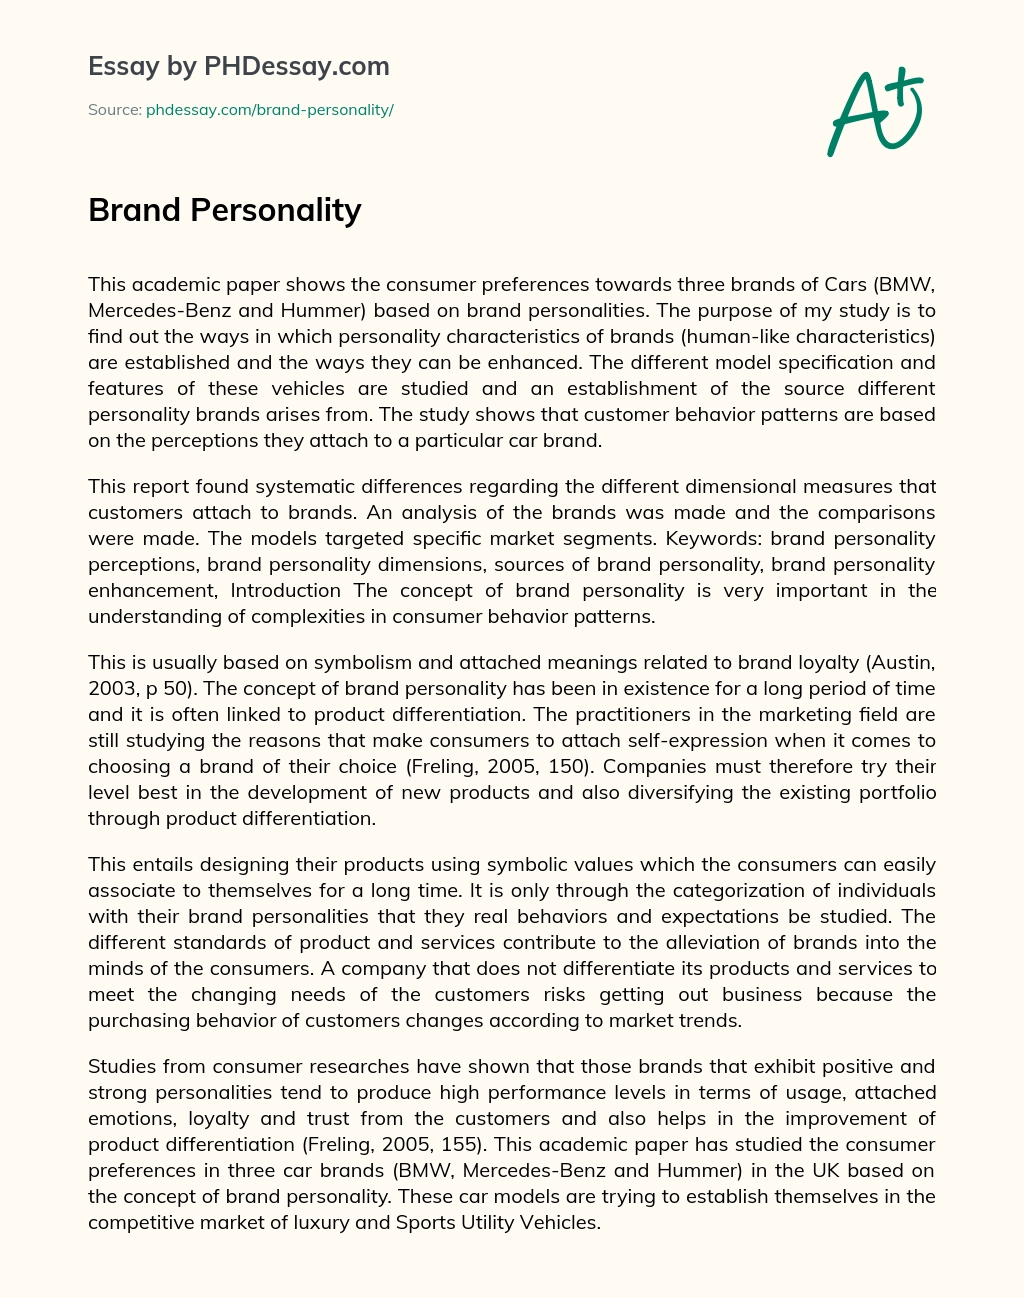 Brand Personality essay